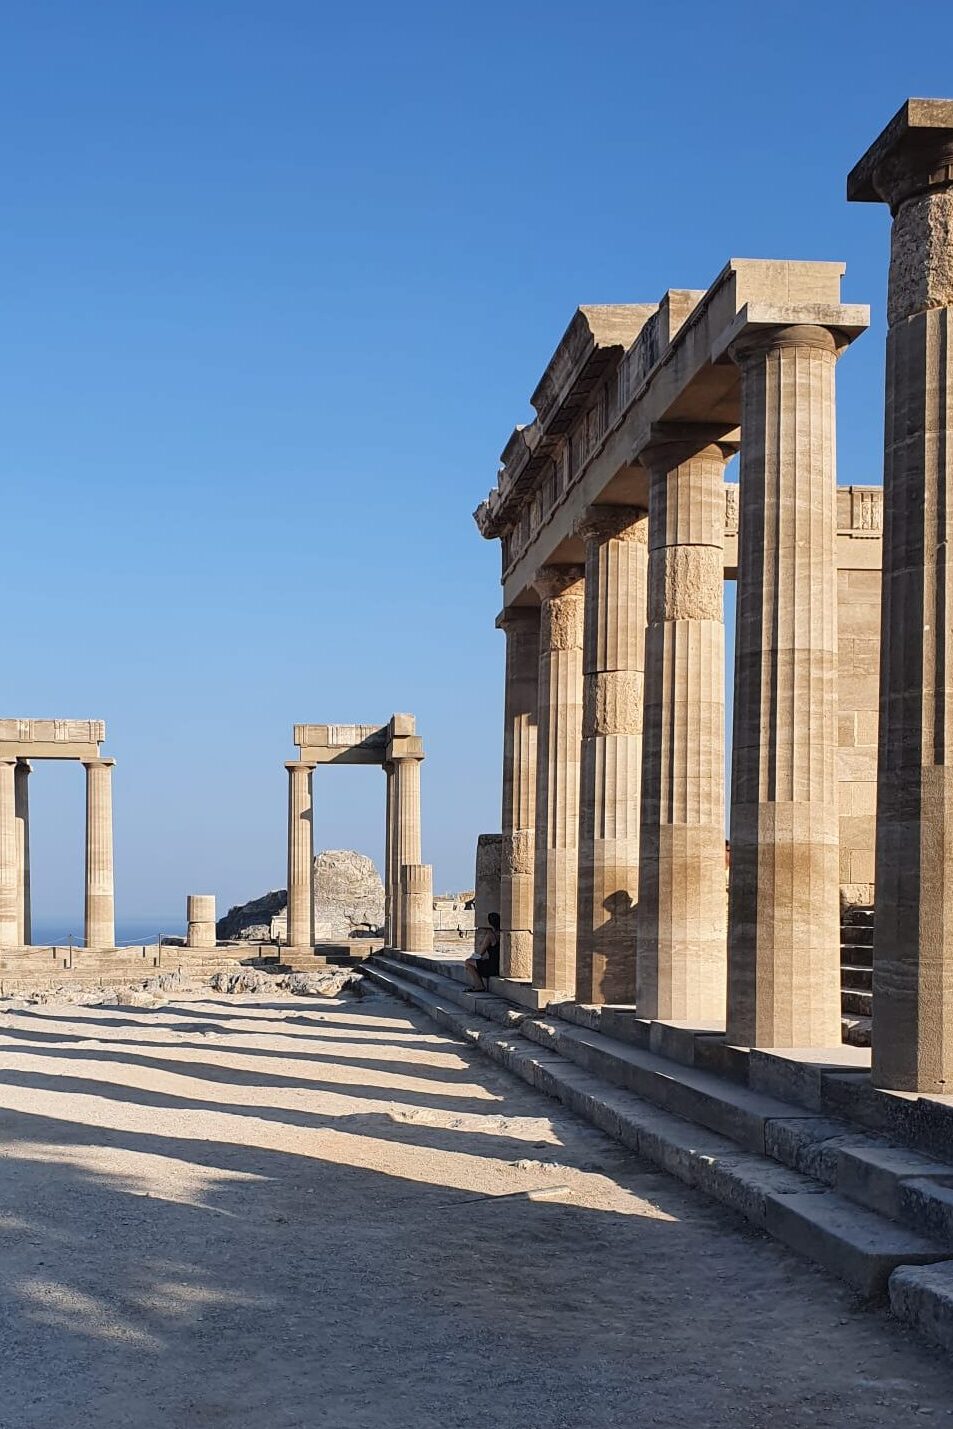 Het oude heiligdom van Lindos: de mooiste Akropolis op het eiland Rhodos